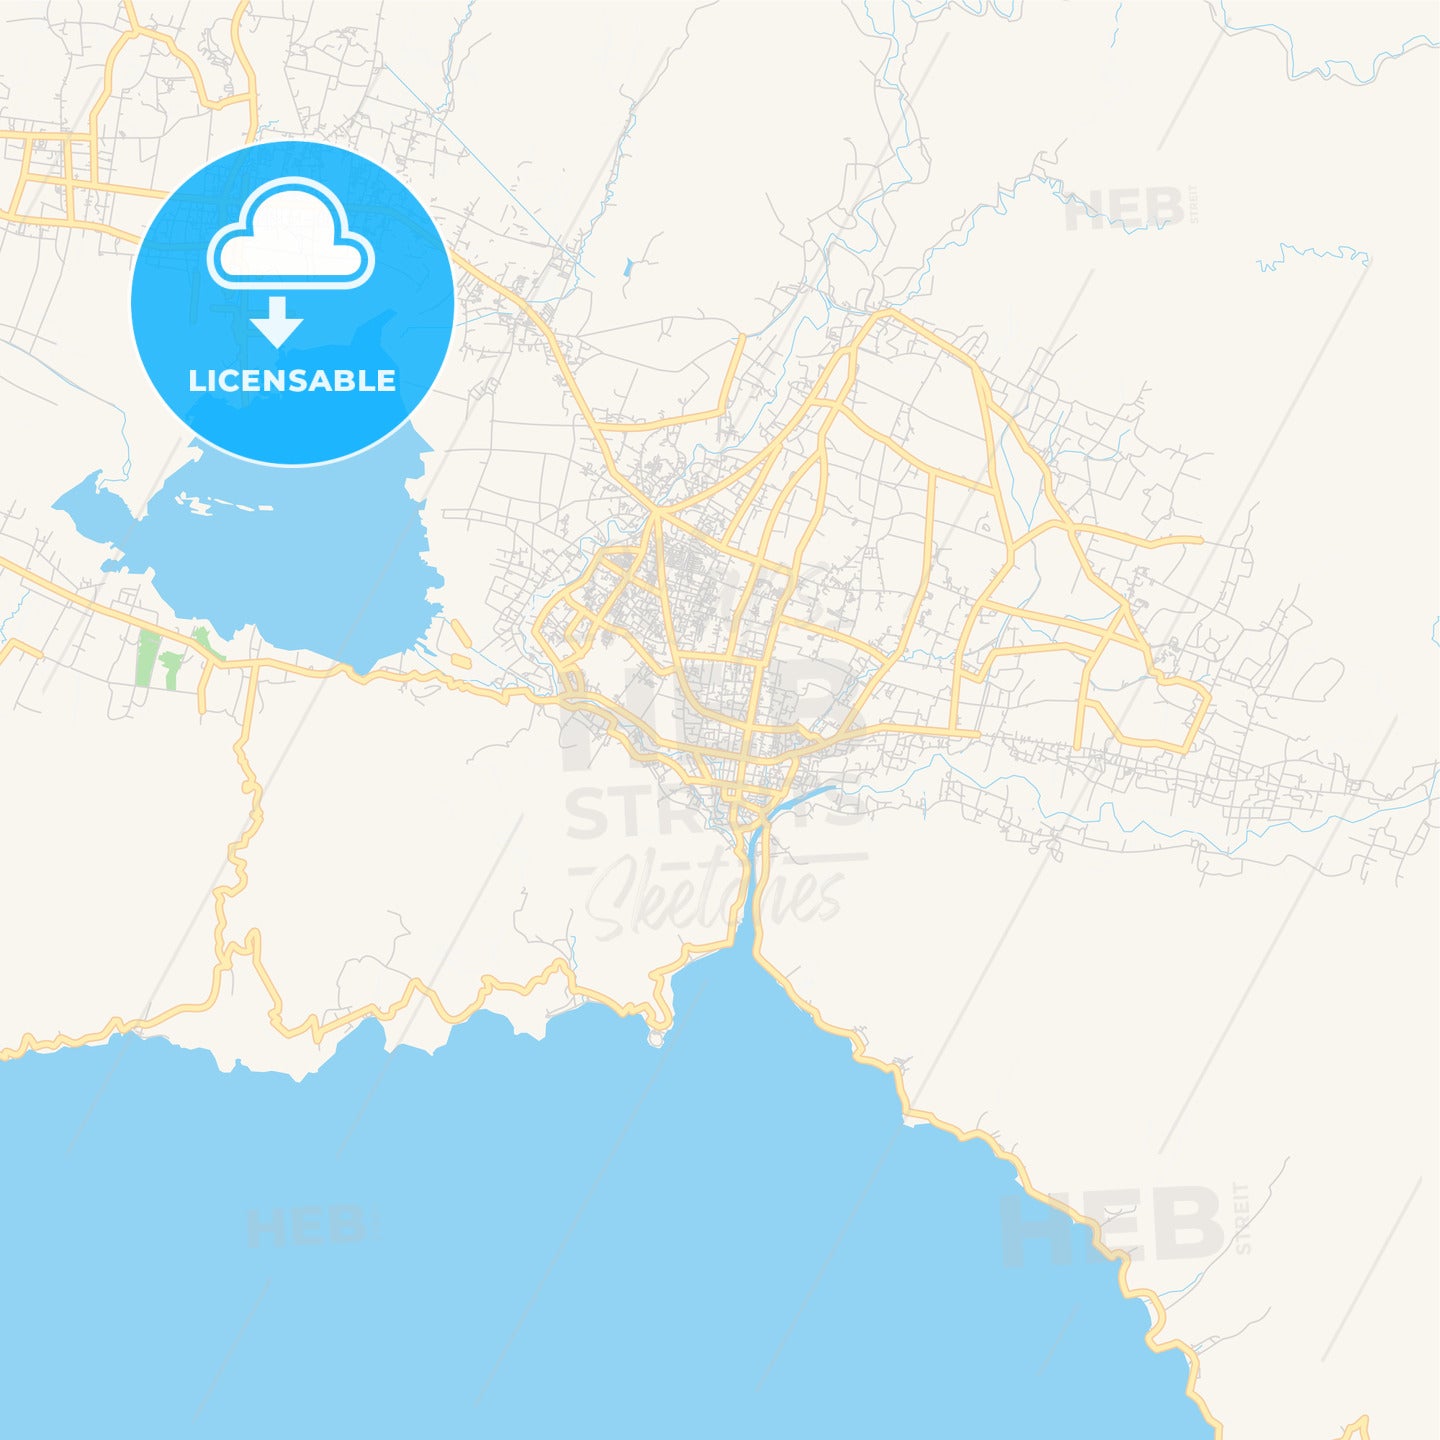 Printable street map of Gorontalo, Indonesia